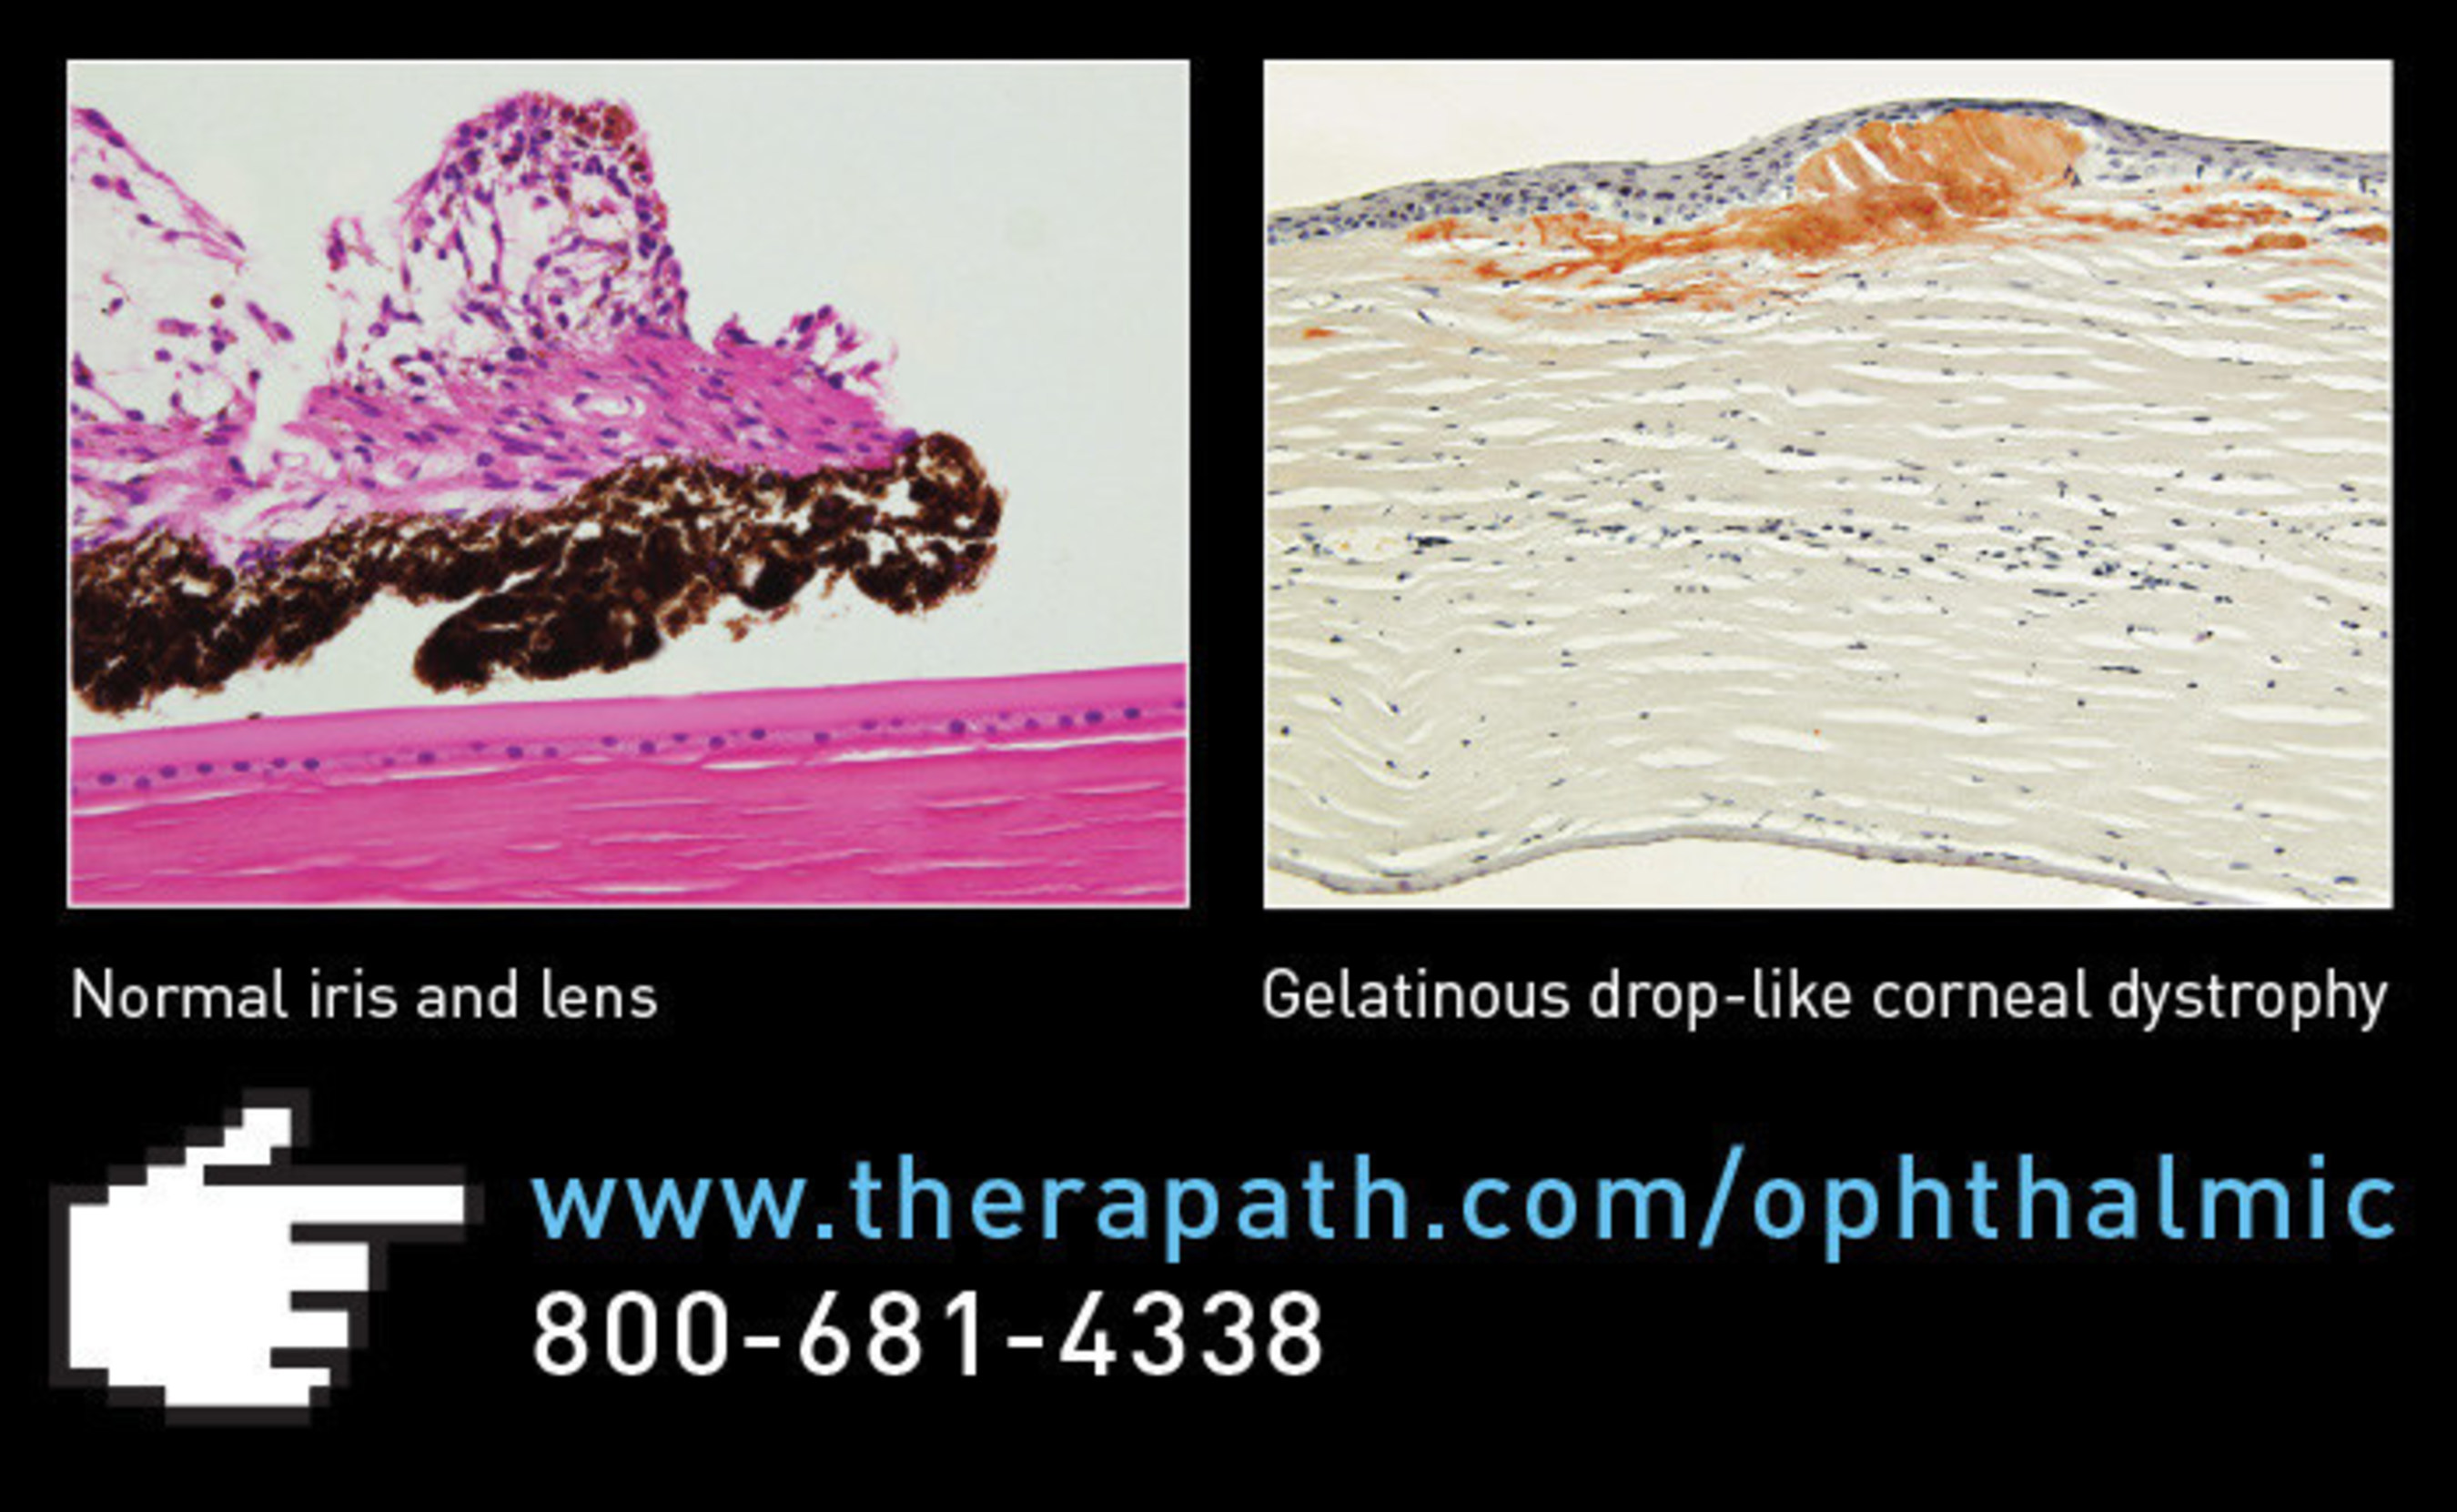 Therapath Neuropathology announces national Ophthalmic Pathology program